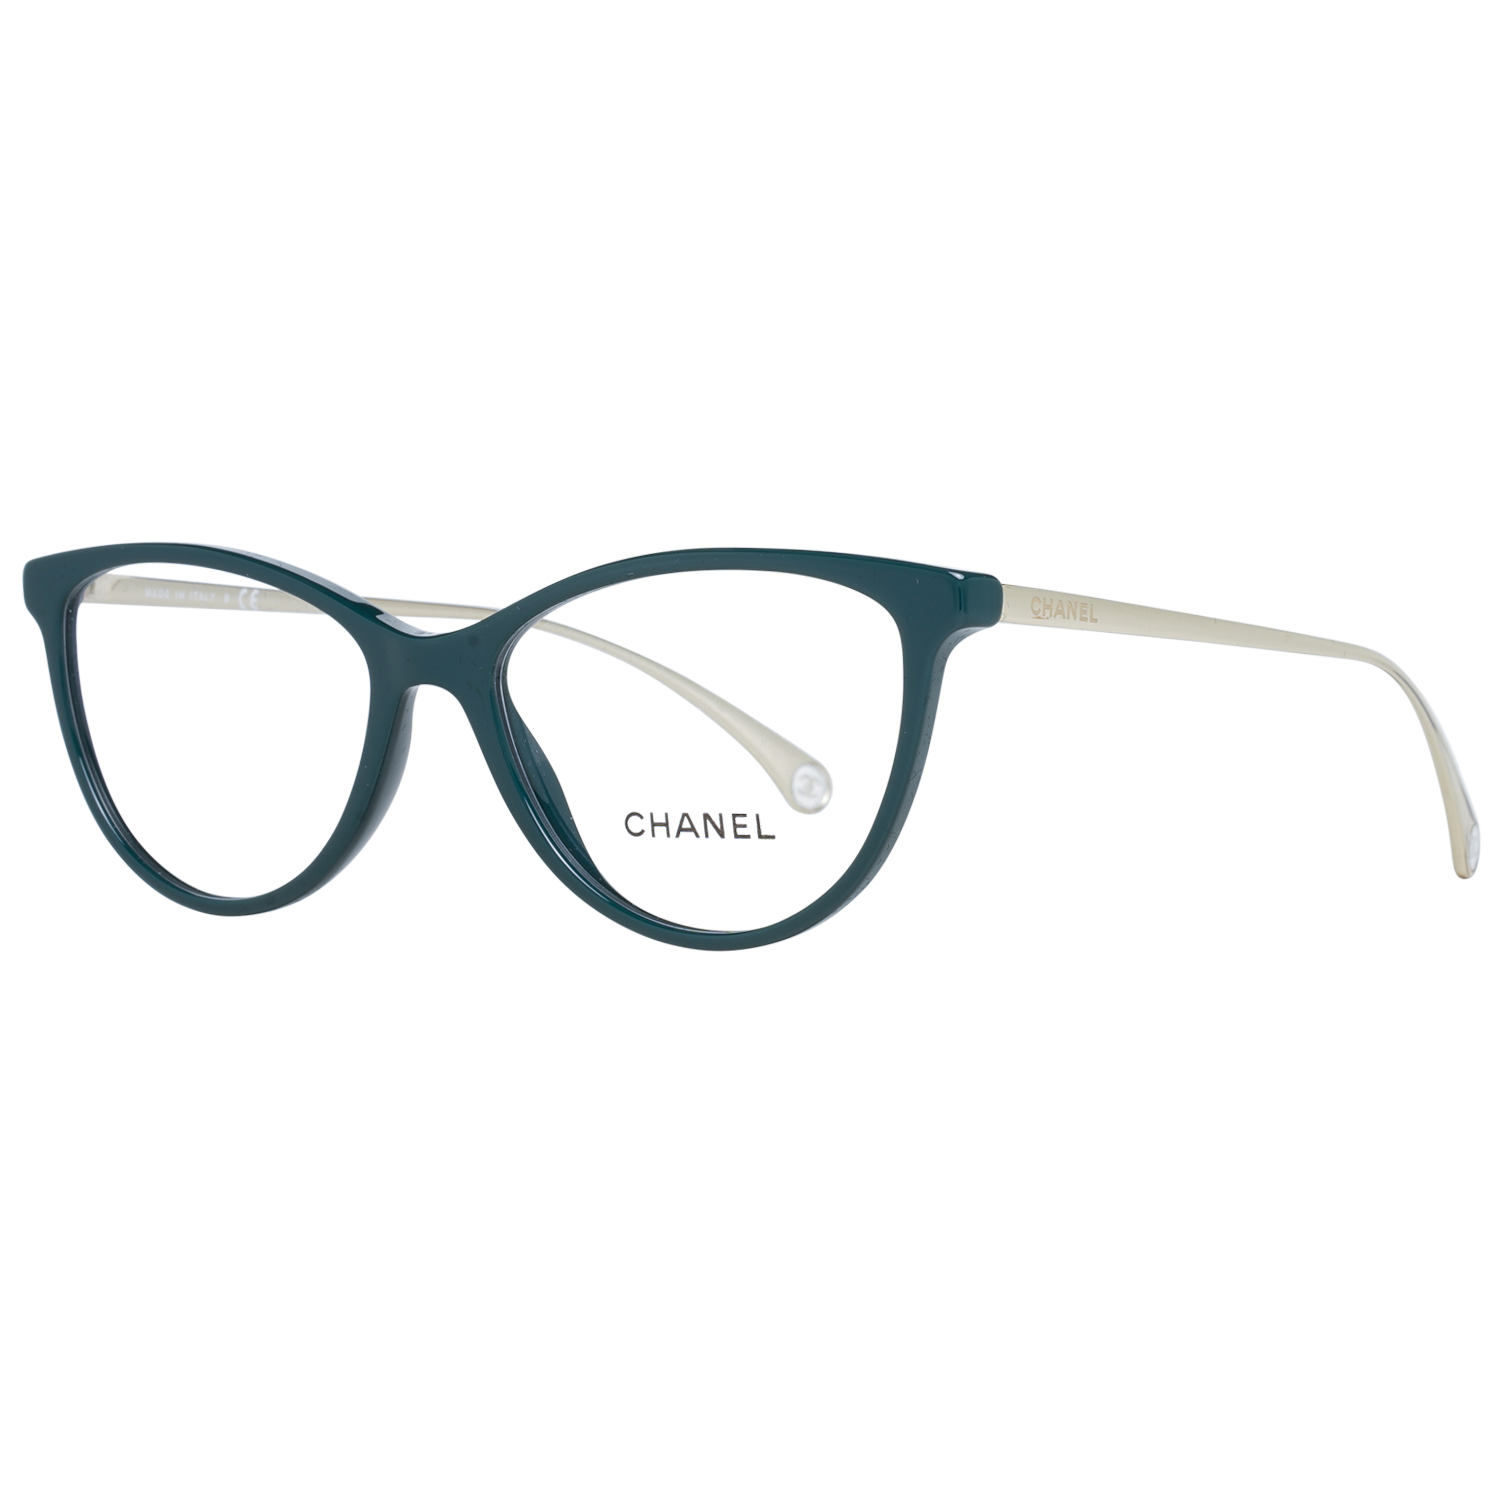 Chanel Frames Chanel Glasses Frames 0CH3423 1699 53mm Eyeglasses Eyewear UK USA Australia 